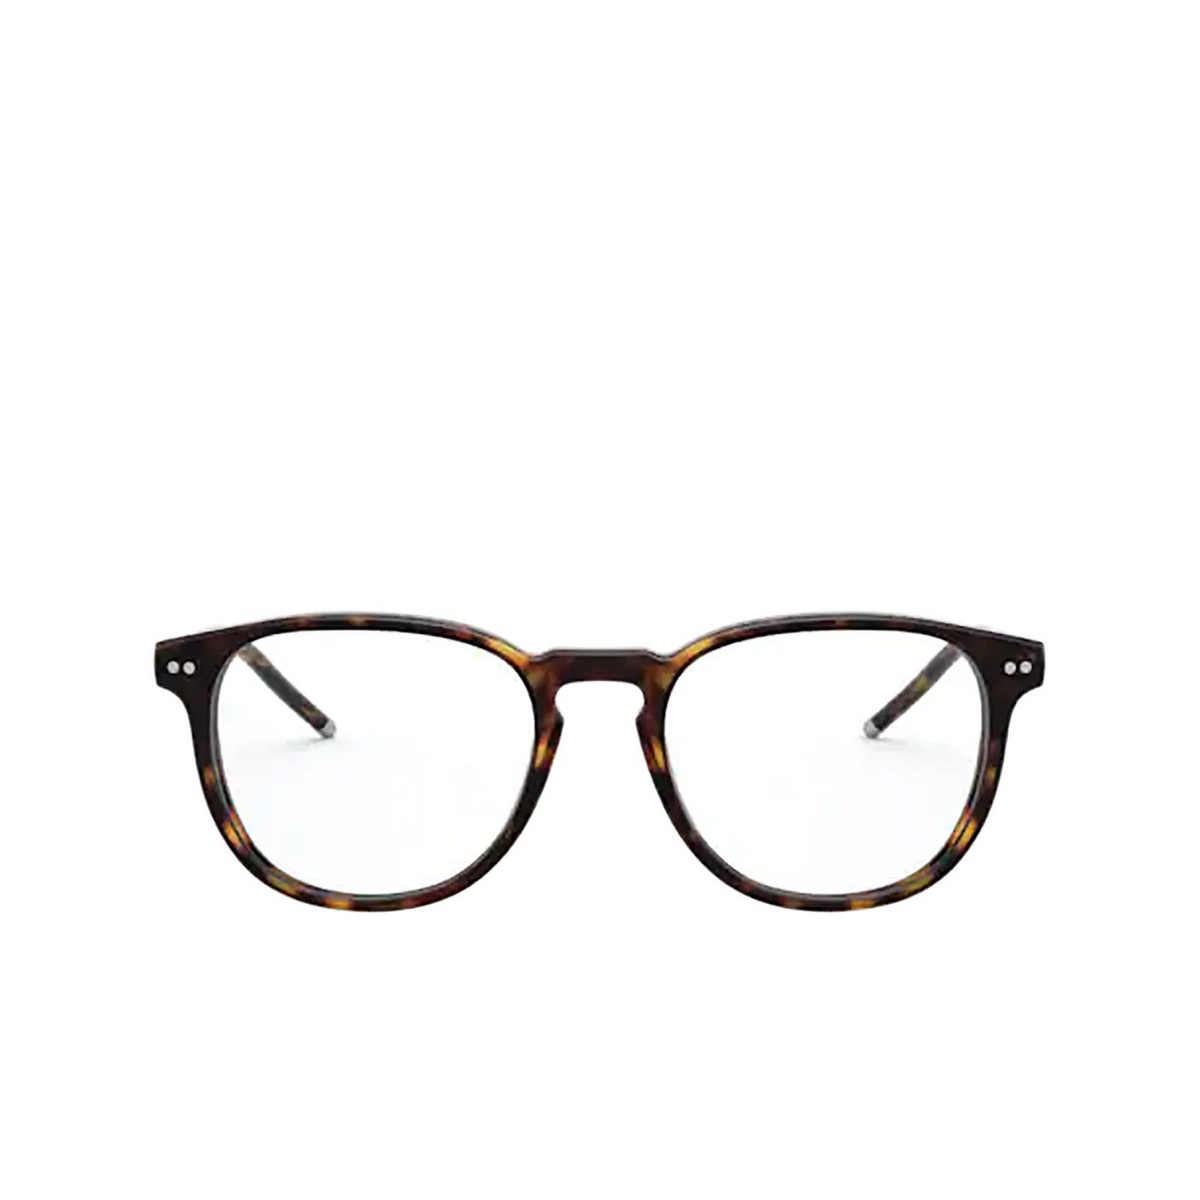 Polo Ralph Lauren® Square Eyeglasses: PH2224 color Shiny Dark Havana 5003 - front view.